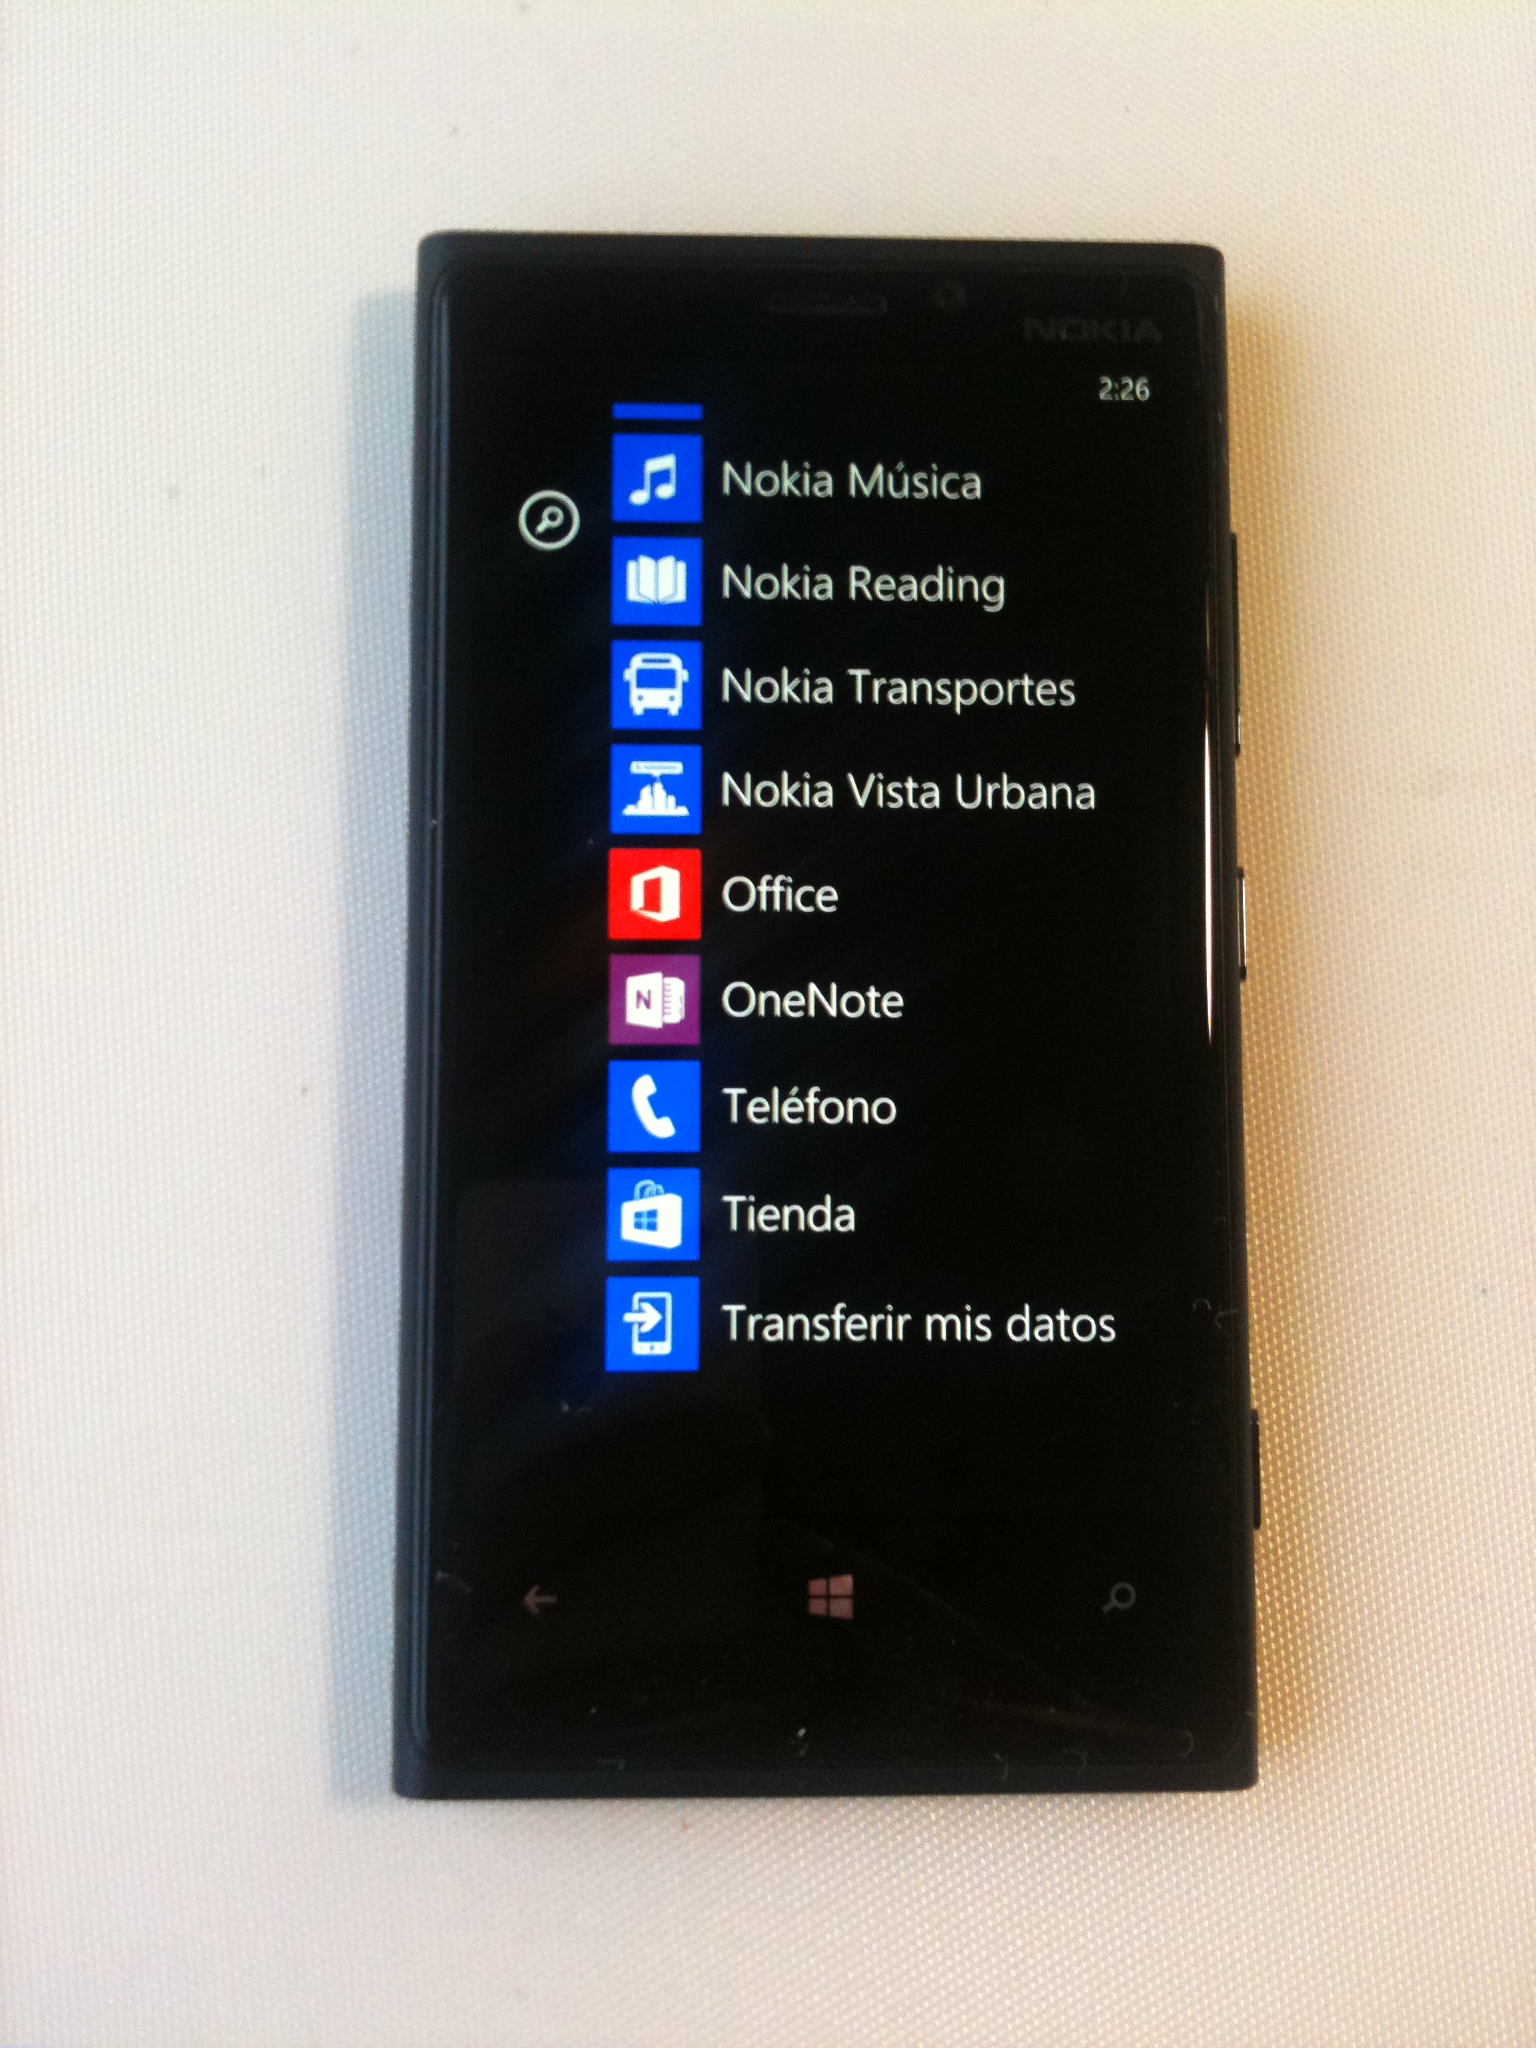 Nokia Lumia 610 I Program Zune